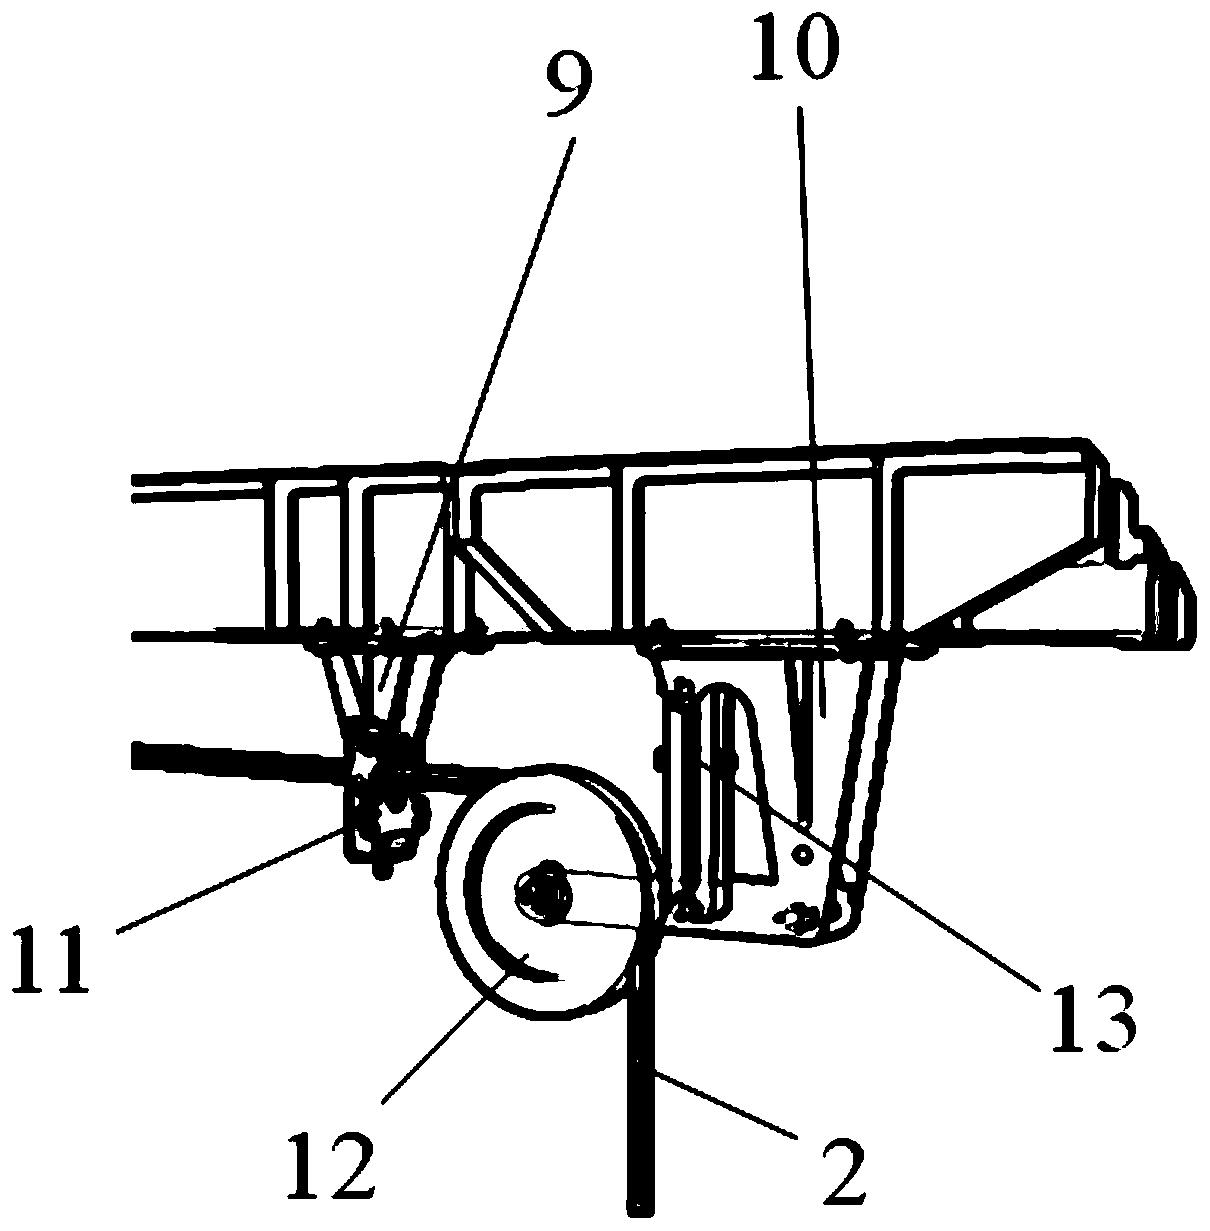 Flexible dragging pod folding and unfolding mechanism and folding and unfolding method